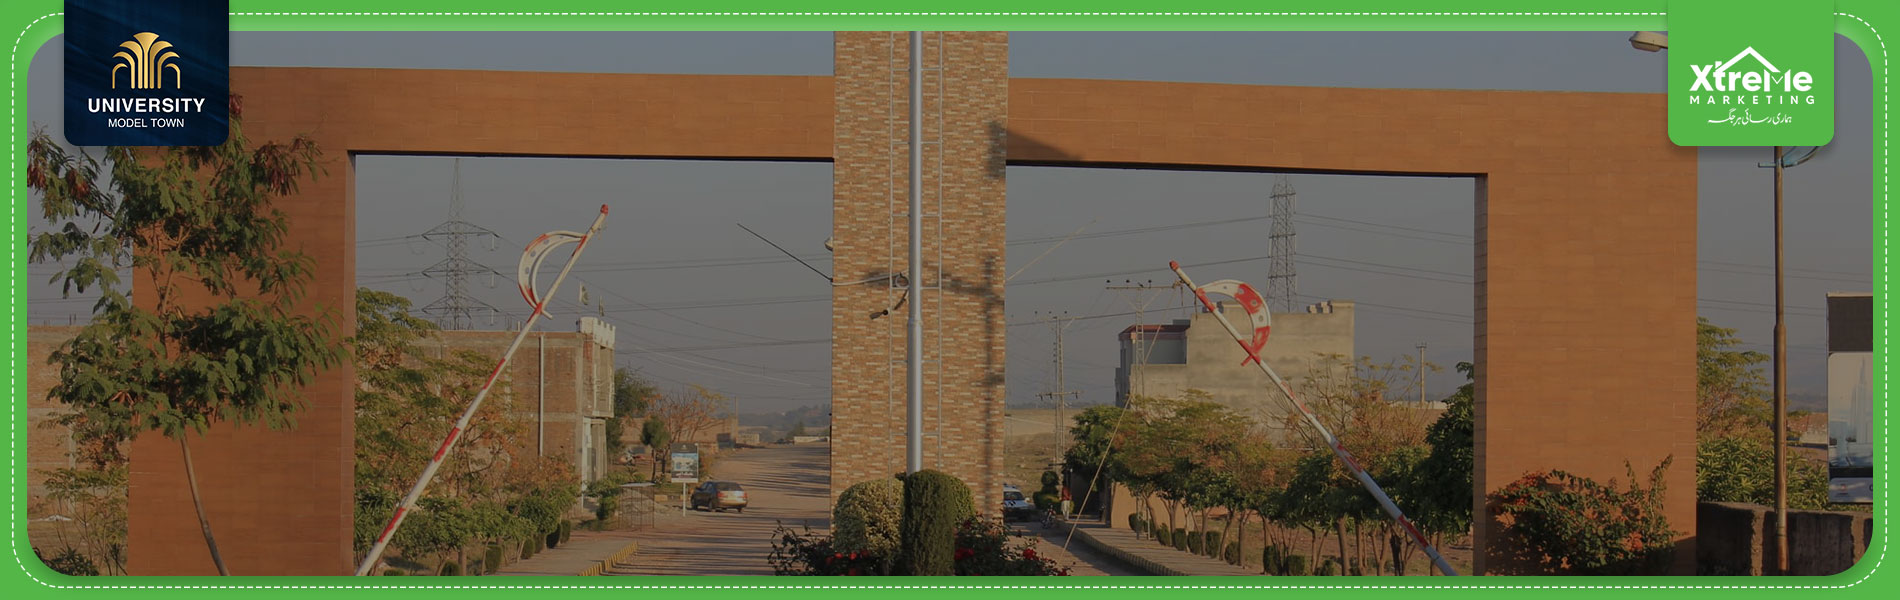 university-model-town-nowshera-gate.jpg